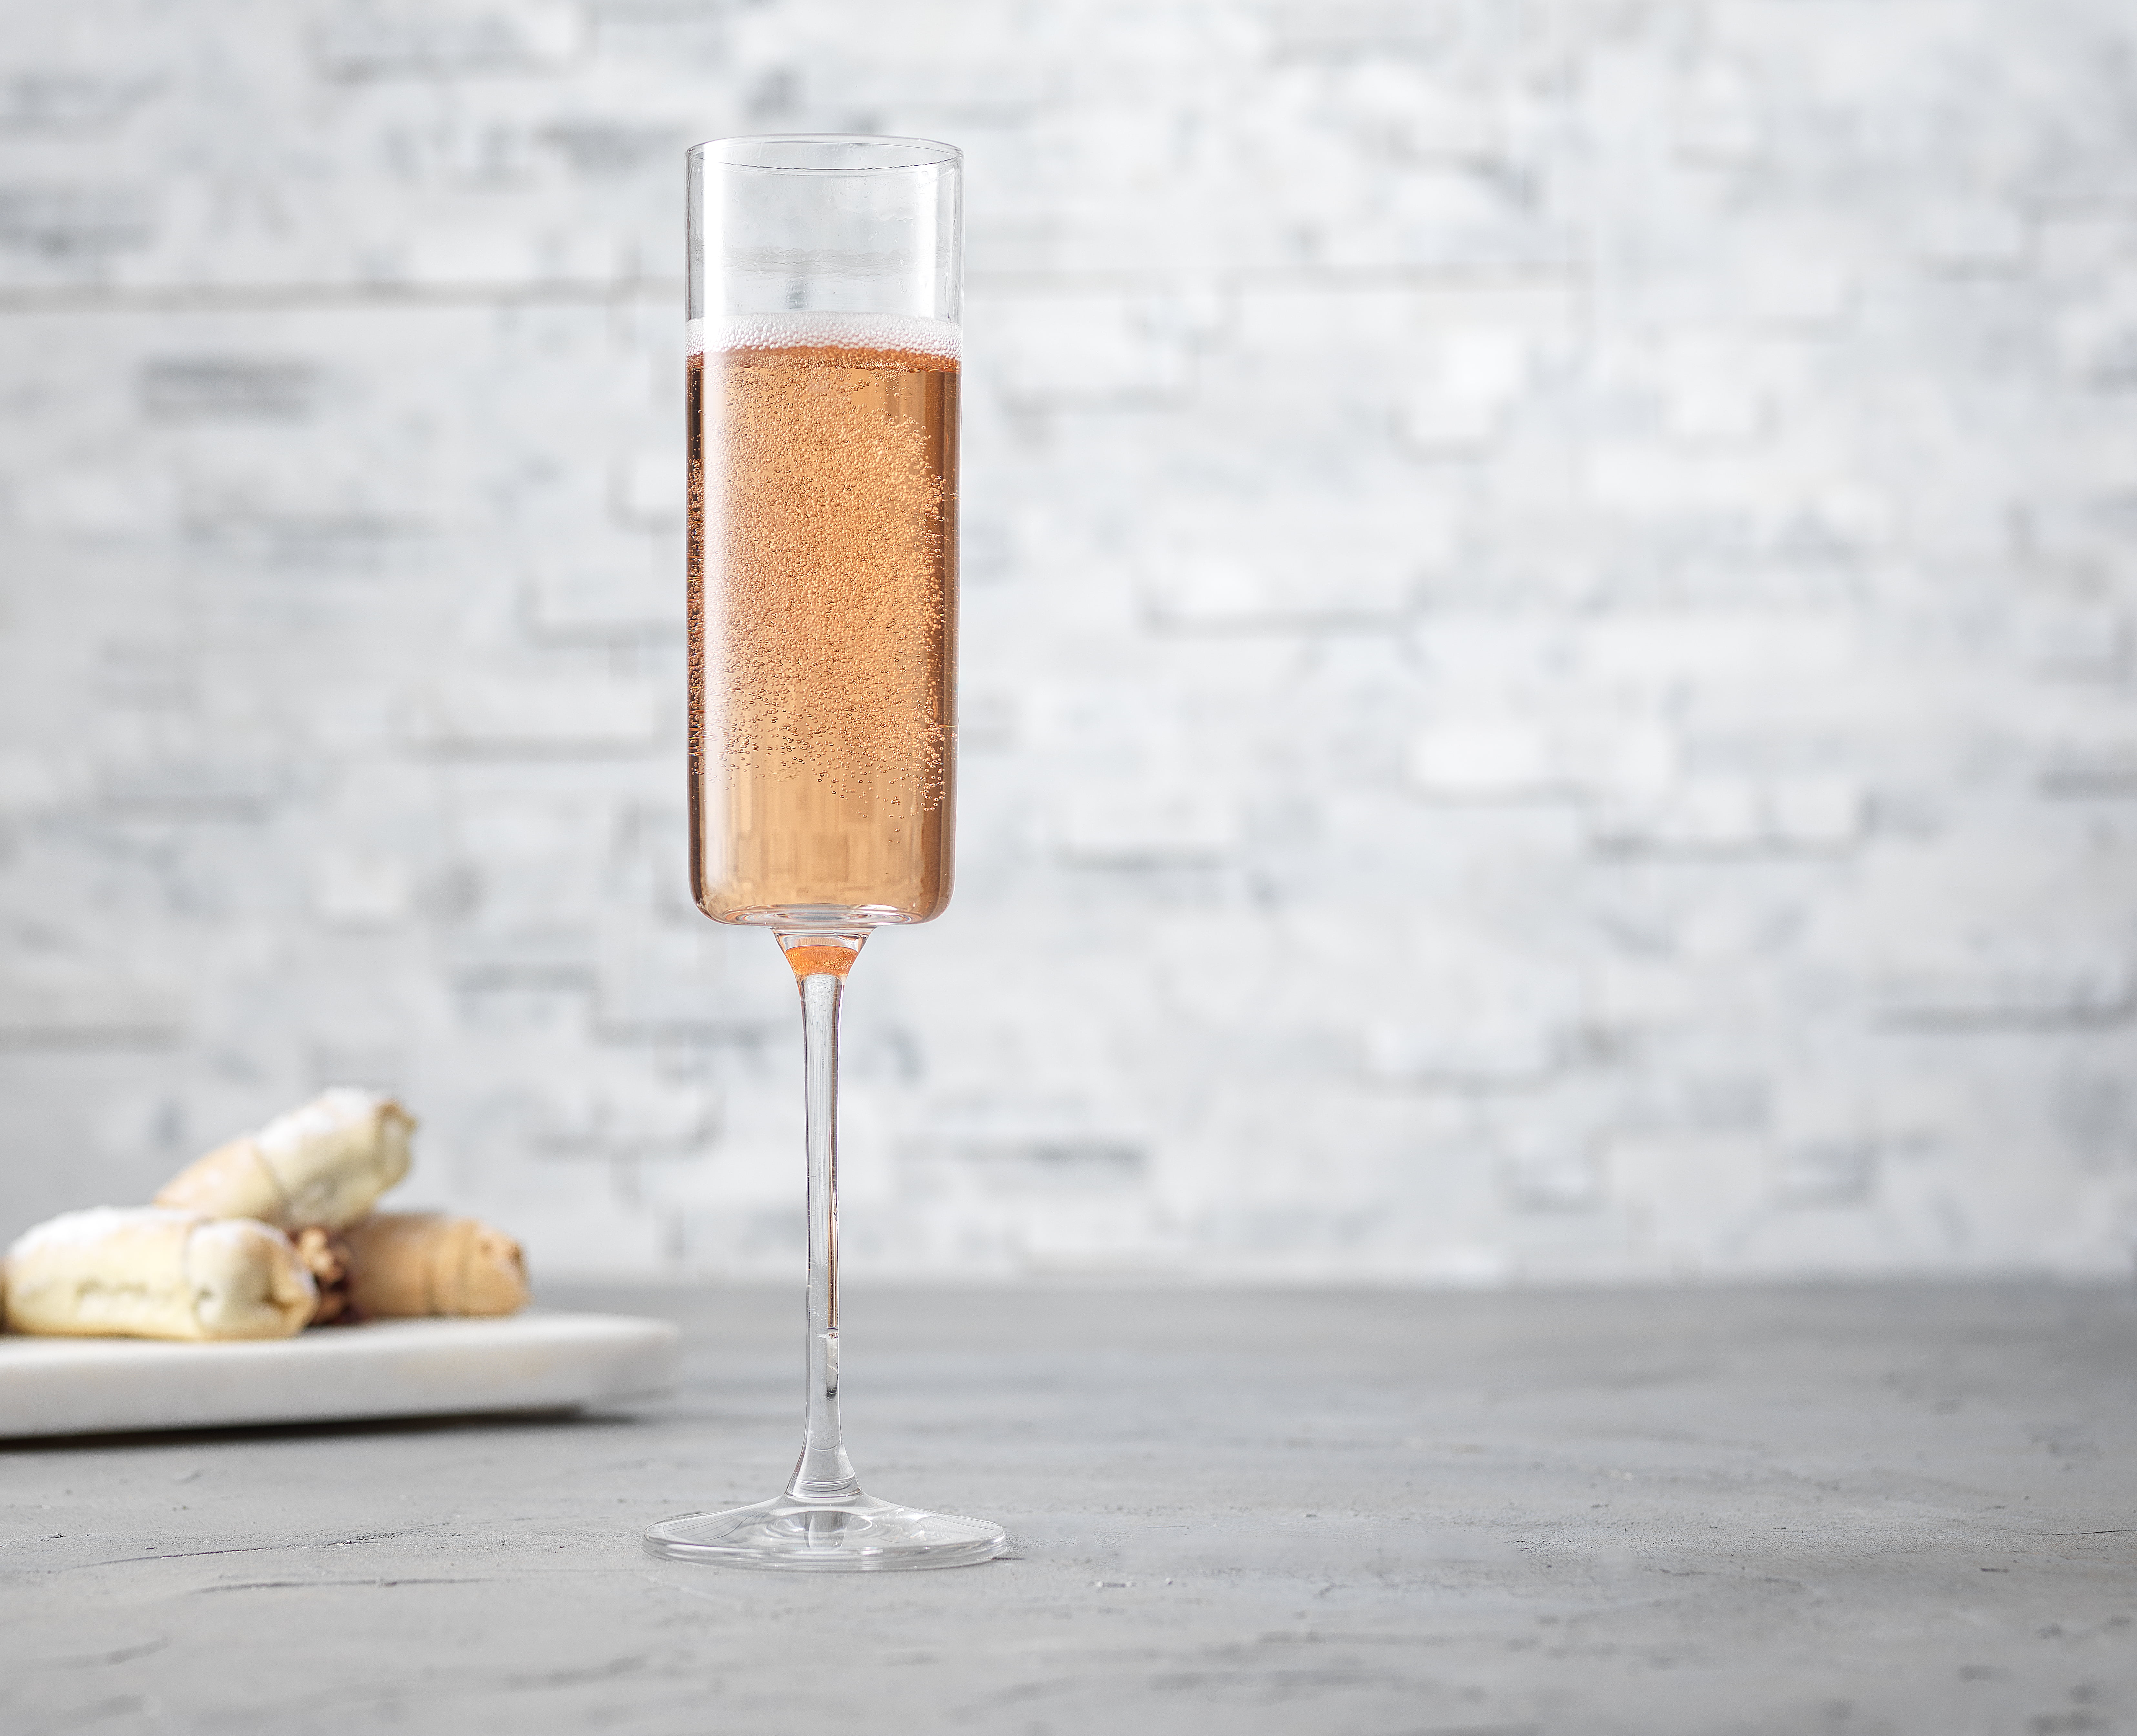 JoyJolt Milo Crystal Stemless Champagne Flute Glass Set of 4 - 9.4 oz